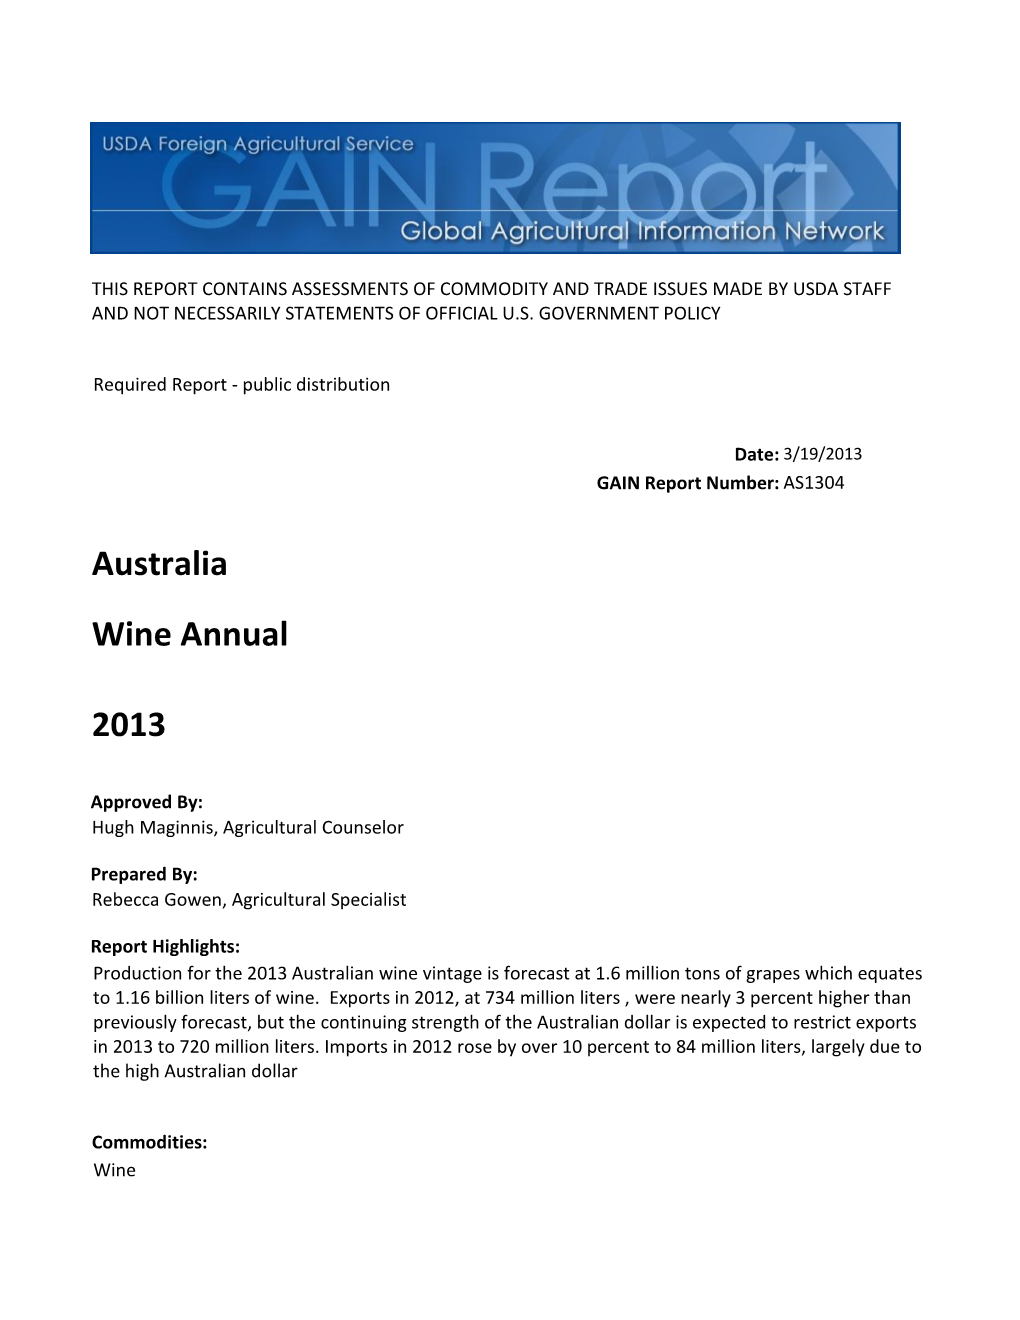 2013 Wine Annual Australia